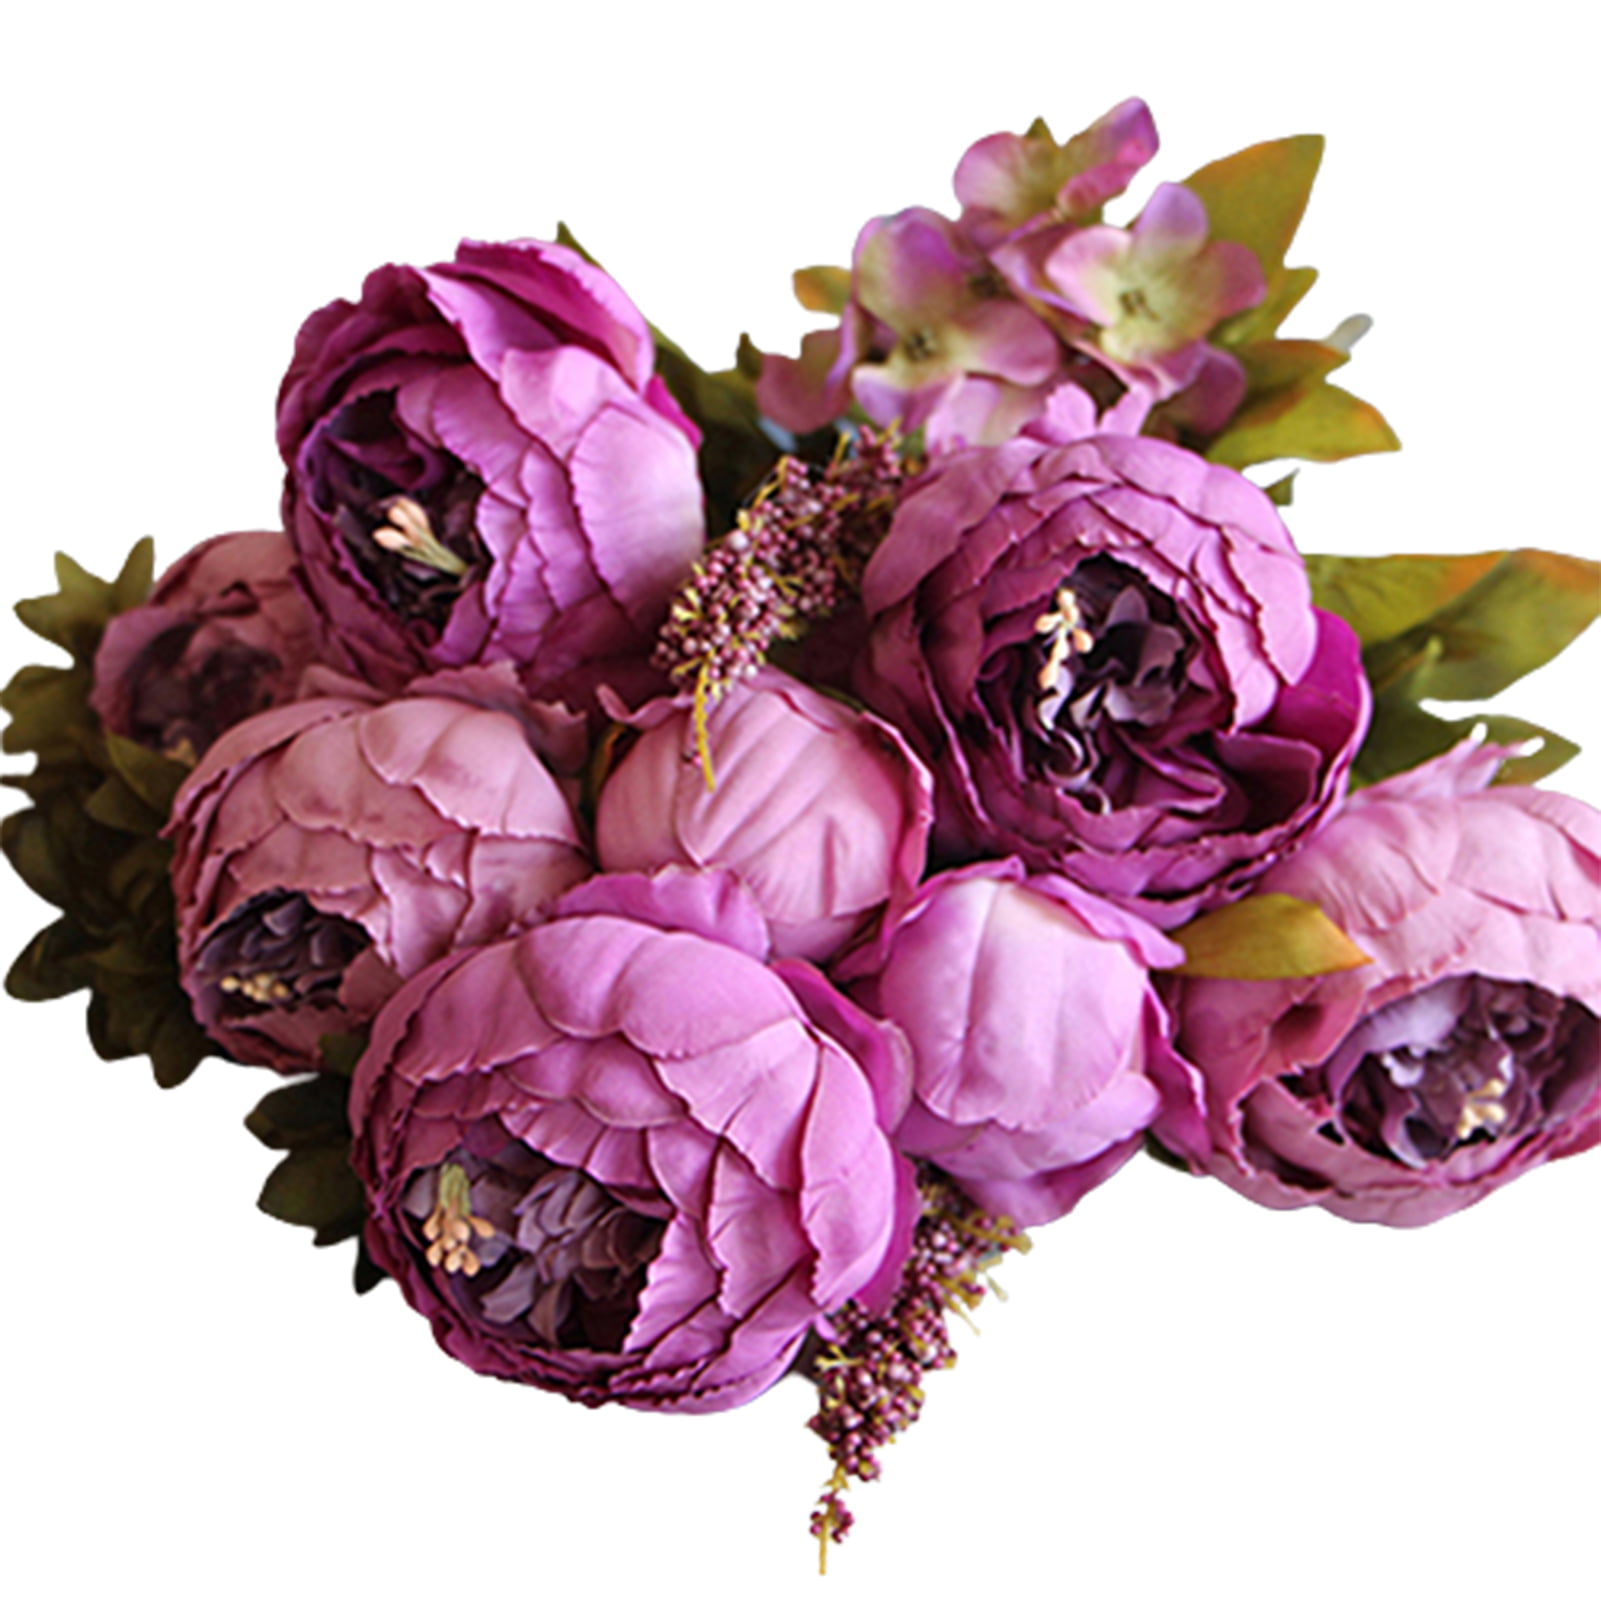 Party Home Wedding Plants European style Silk Flowers Peony Decoration Bouquet